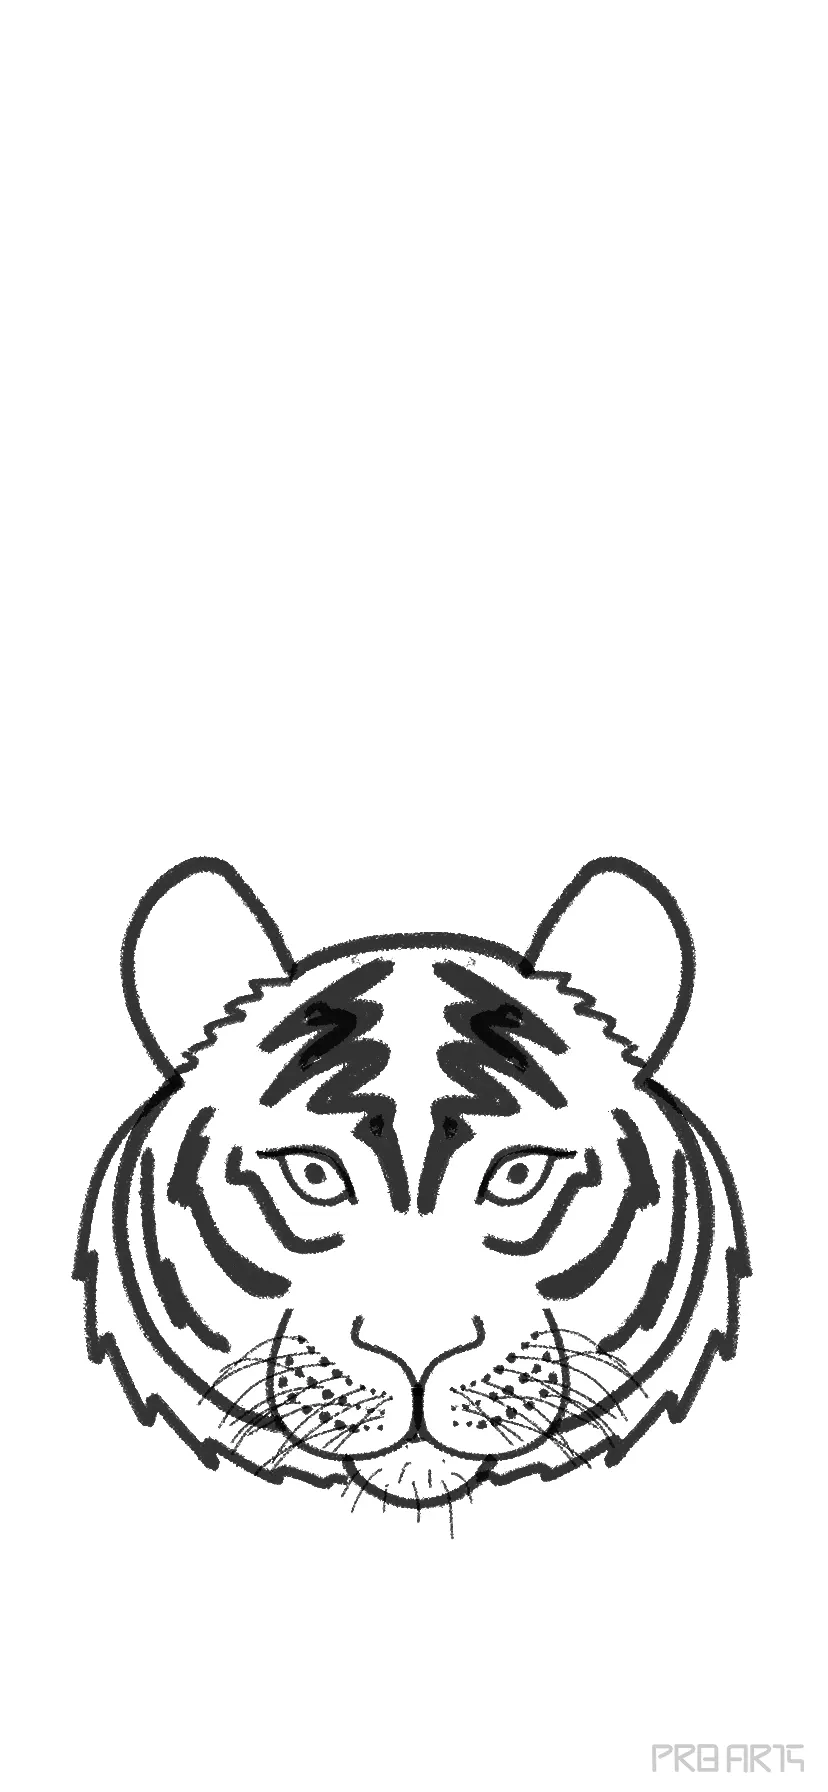 16600 Tiger Face Illustrations RoyaltyFree Vector Graphics  Clip Art   iStock  Tiger face vector Tiger face close up Tiger face icon